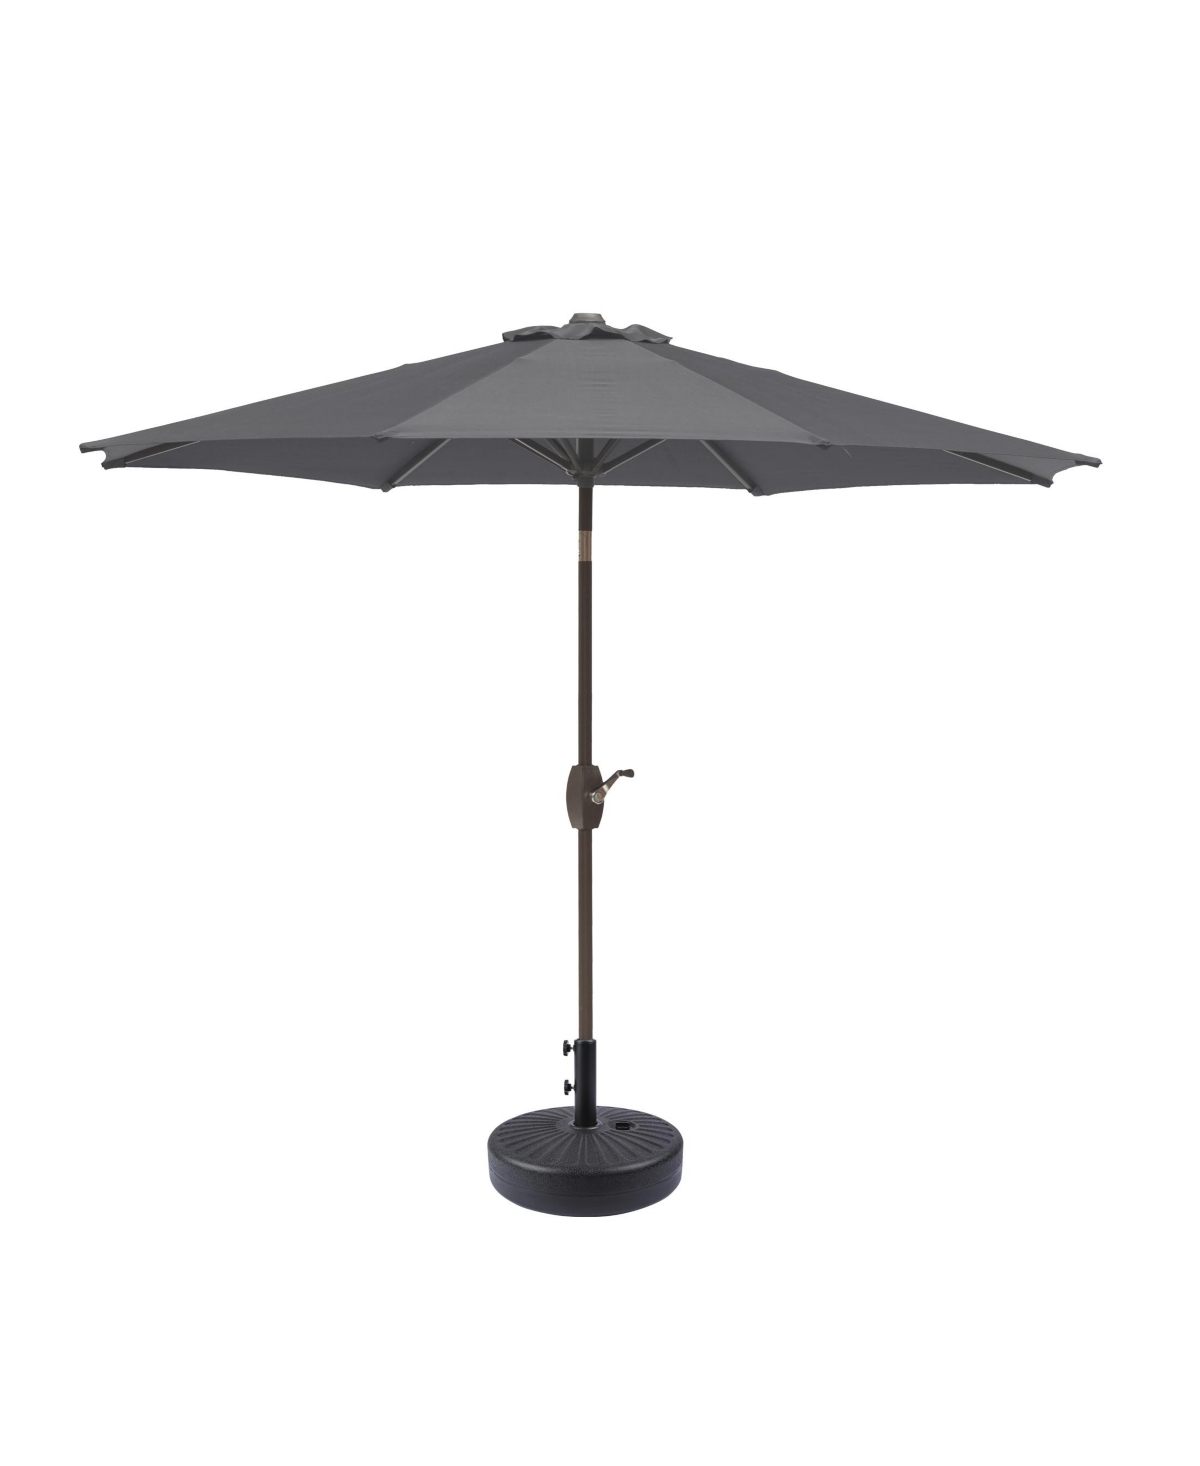 9 Ft Outdoor Patio Market Umbrella with Black Round Base - Turquoise